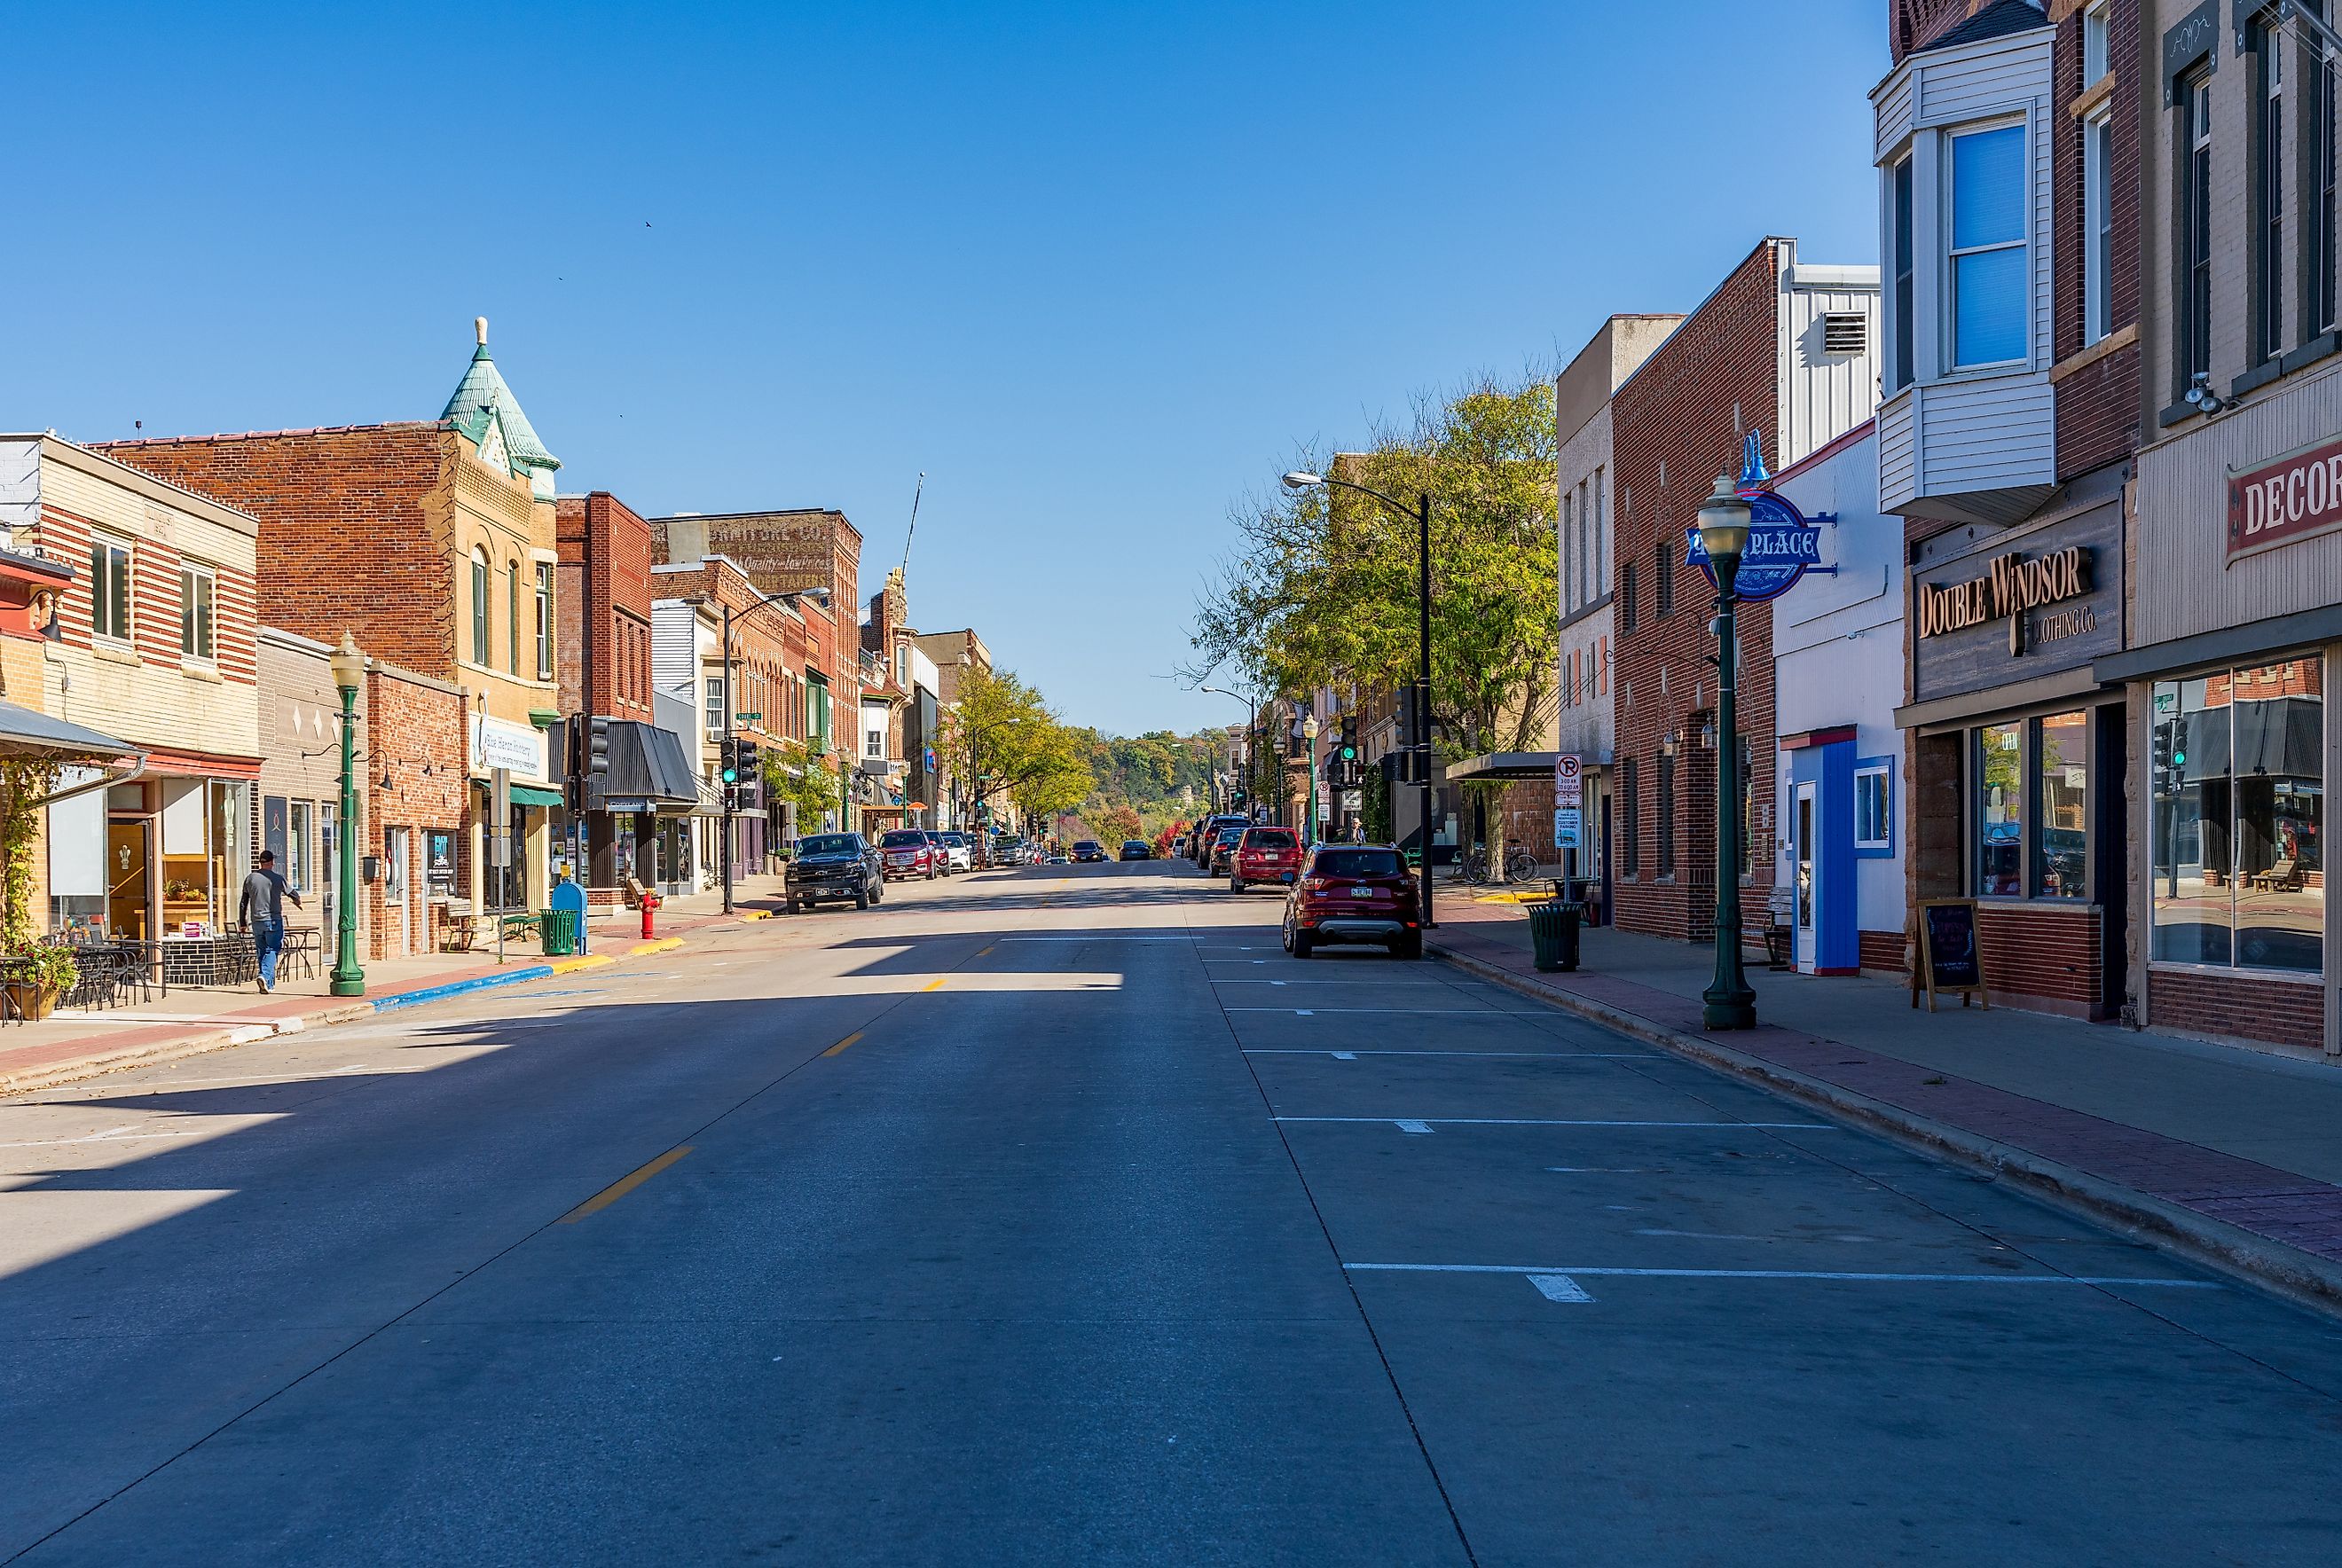 Businesses lined along the bustling W Water Street in Decorah, Iowa. Editorial credit: Steve Heap / Shutterstock.com